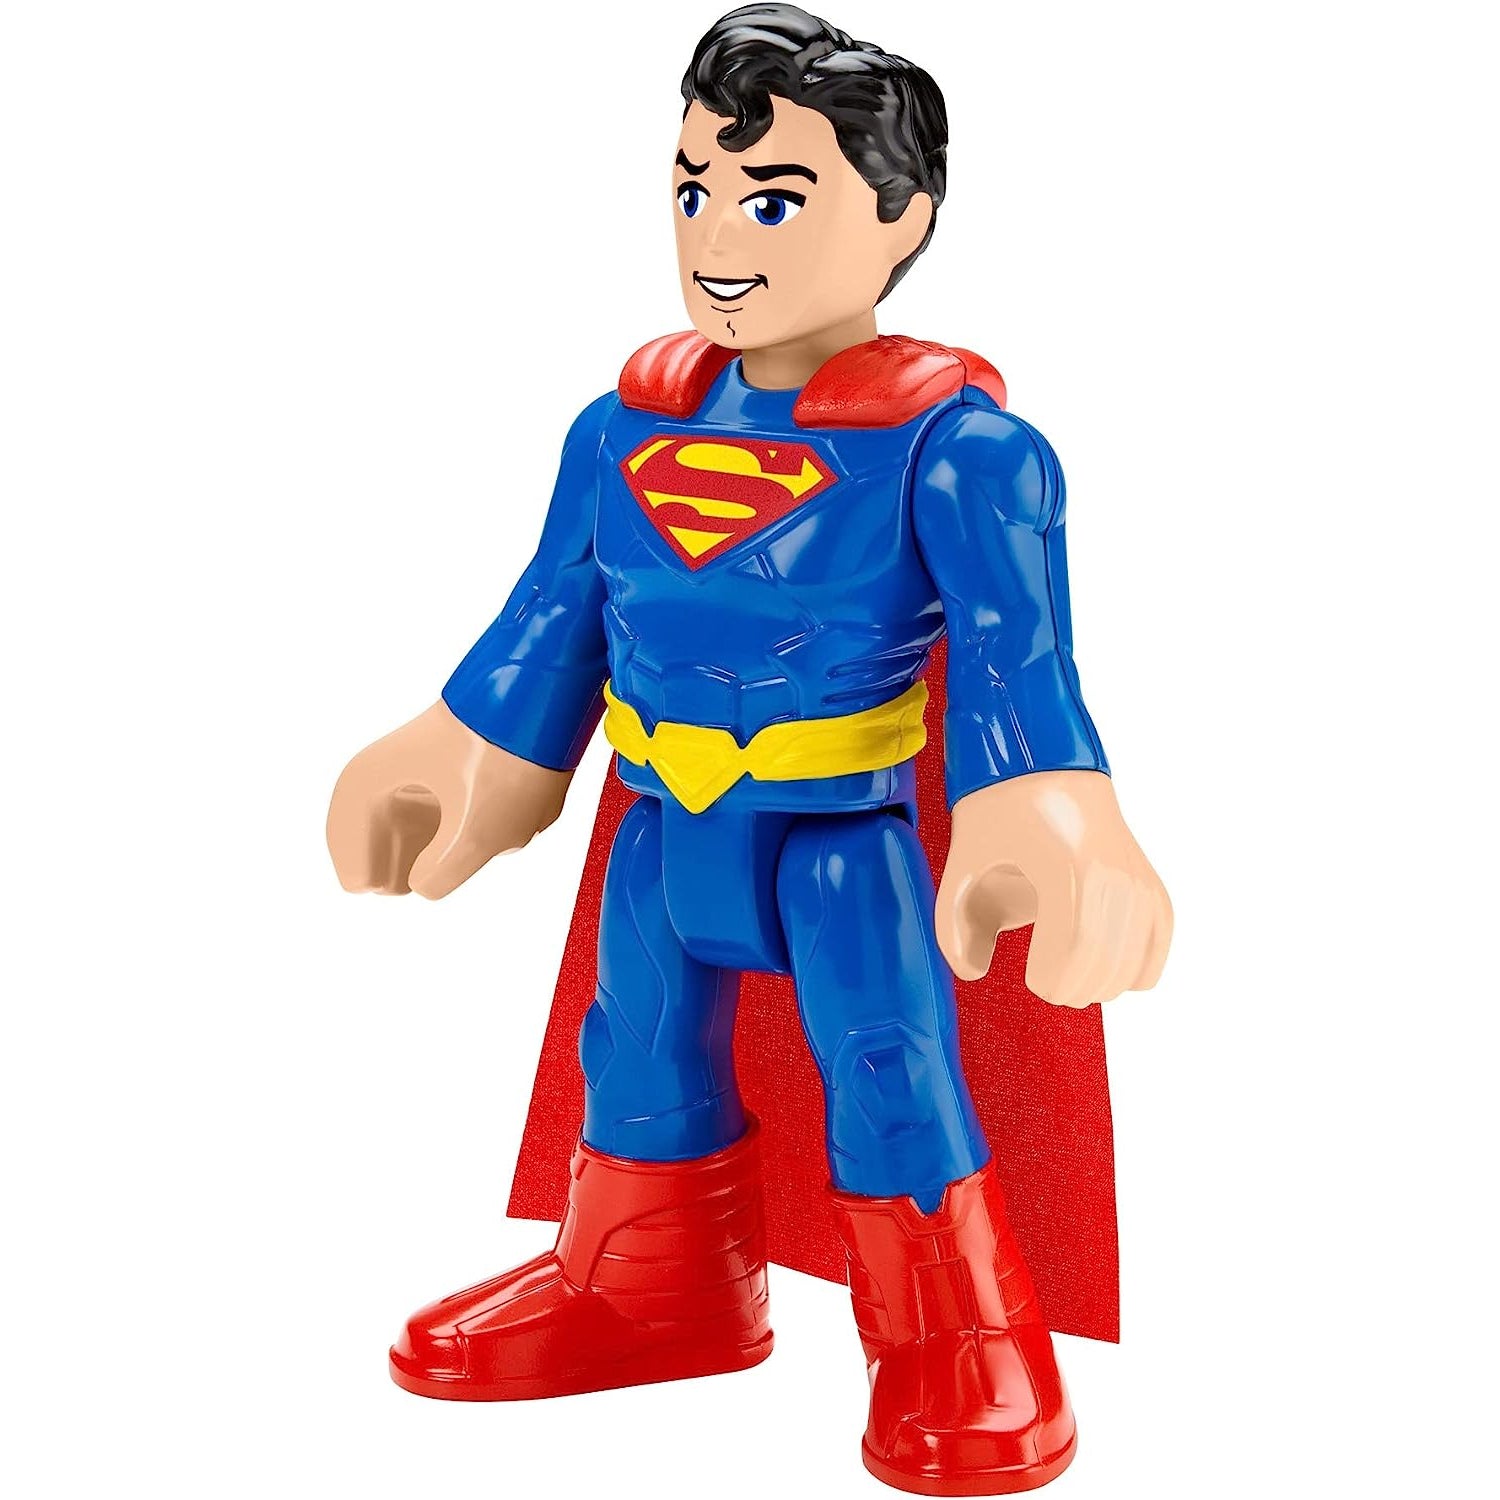 Fisher Price Imaginext Dc Super Friends XL Super Hero Character Figures - 1 Figure